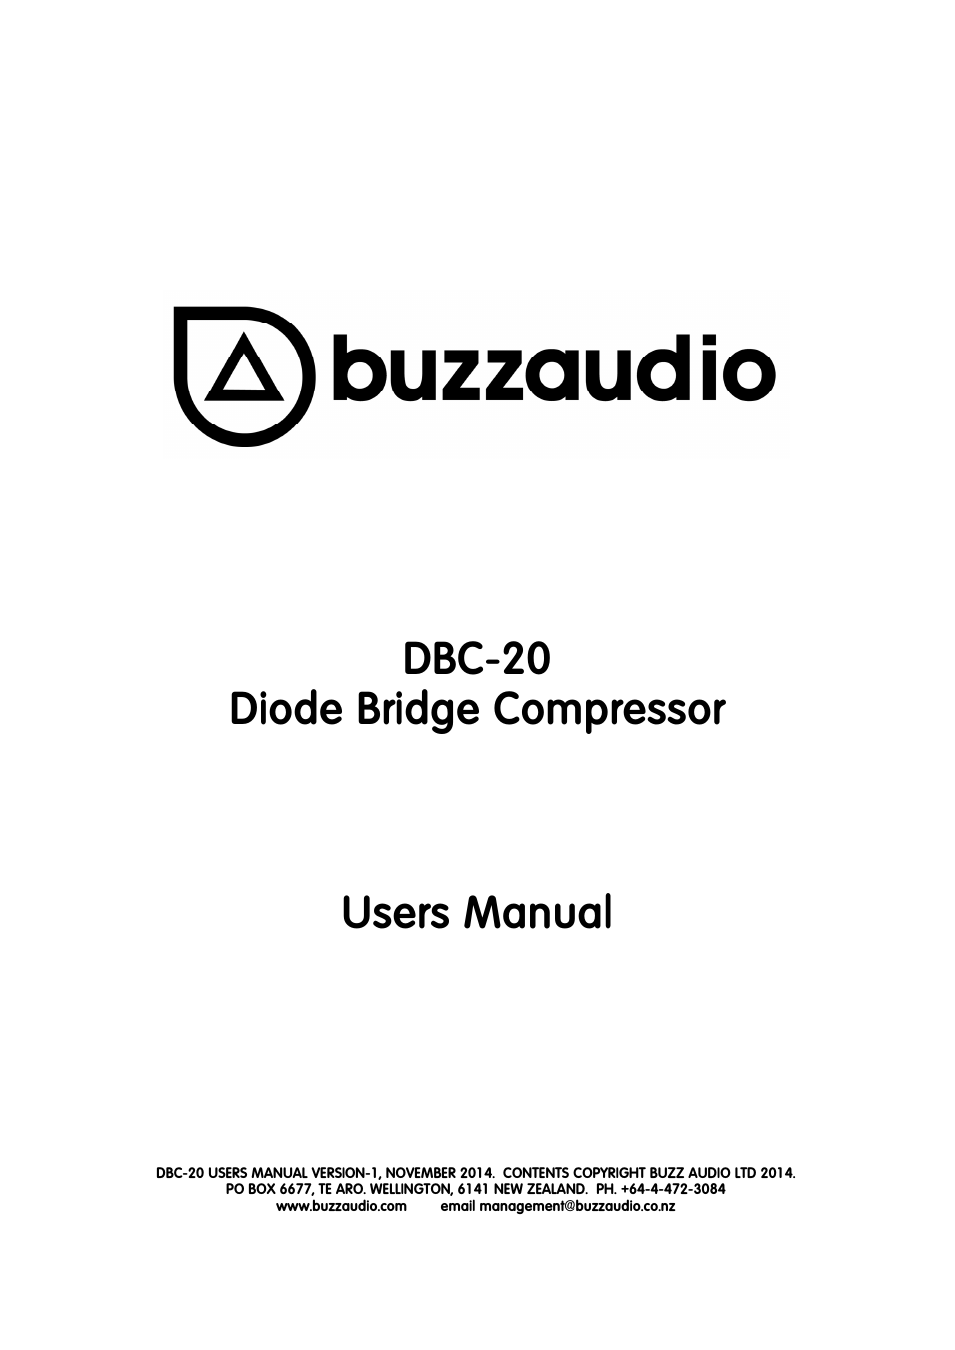 dbc-20diode bridge compressor